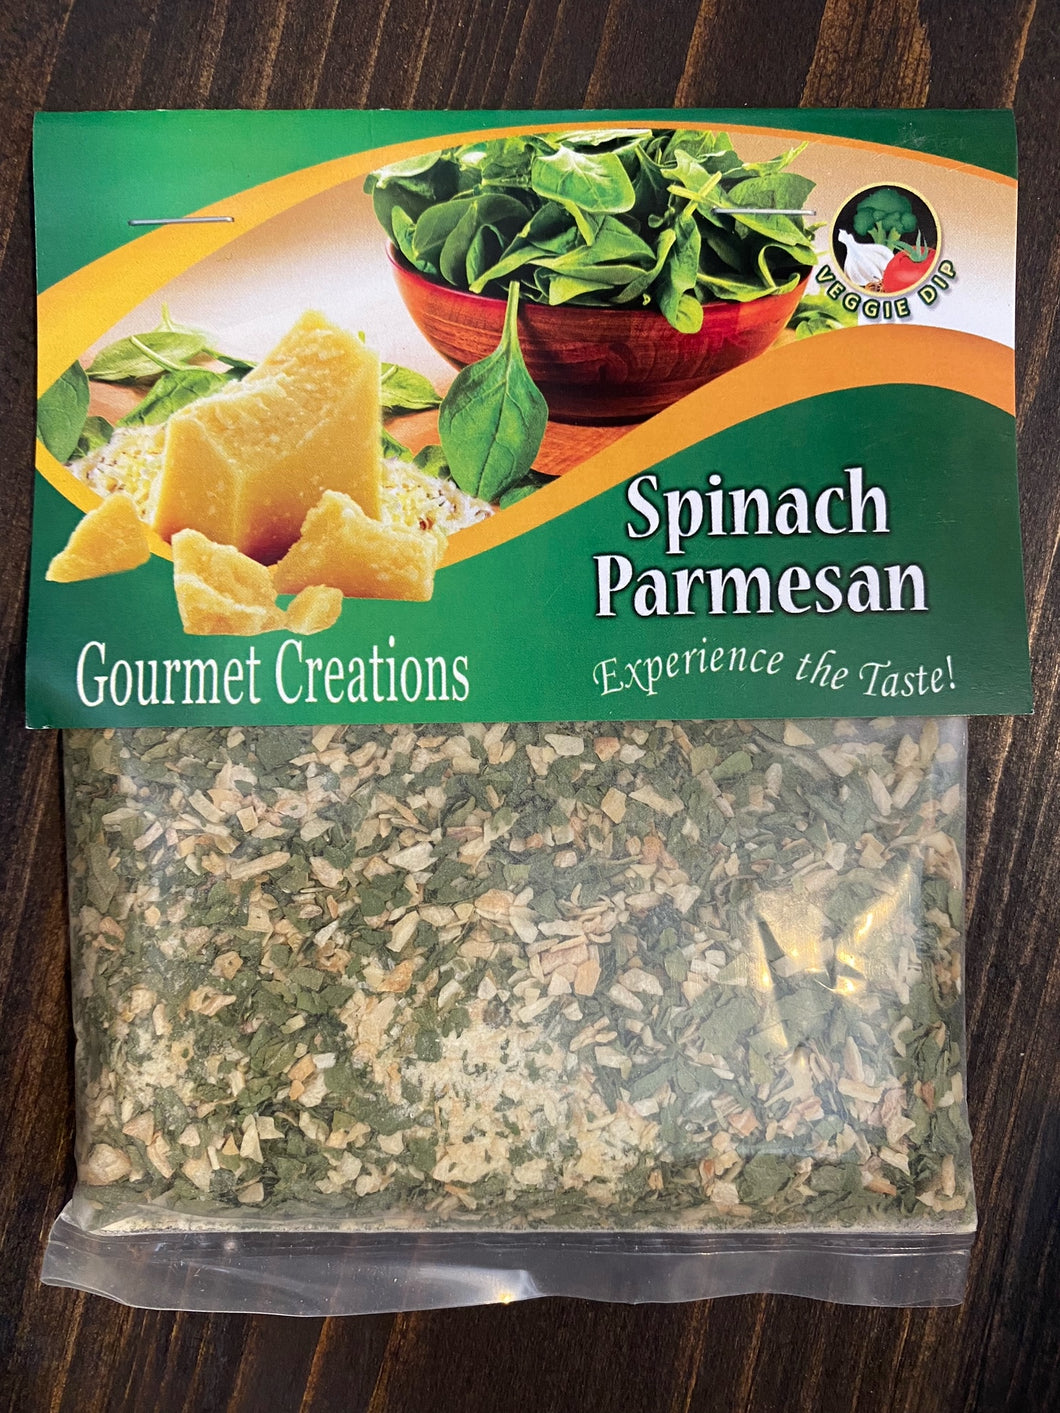 Spinach Parmesan